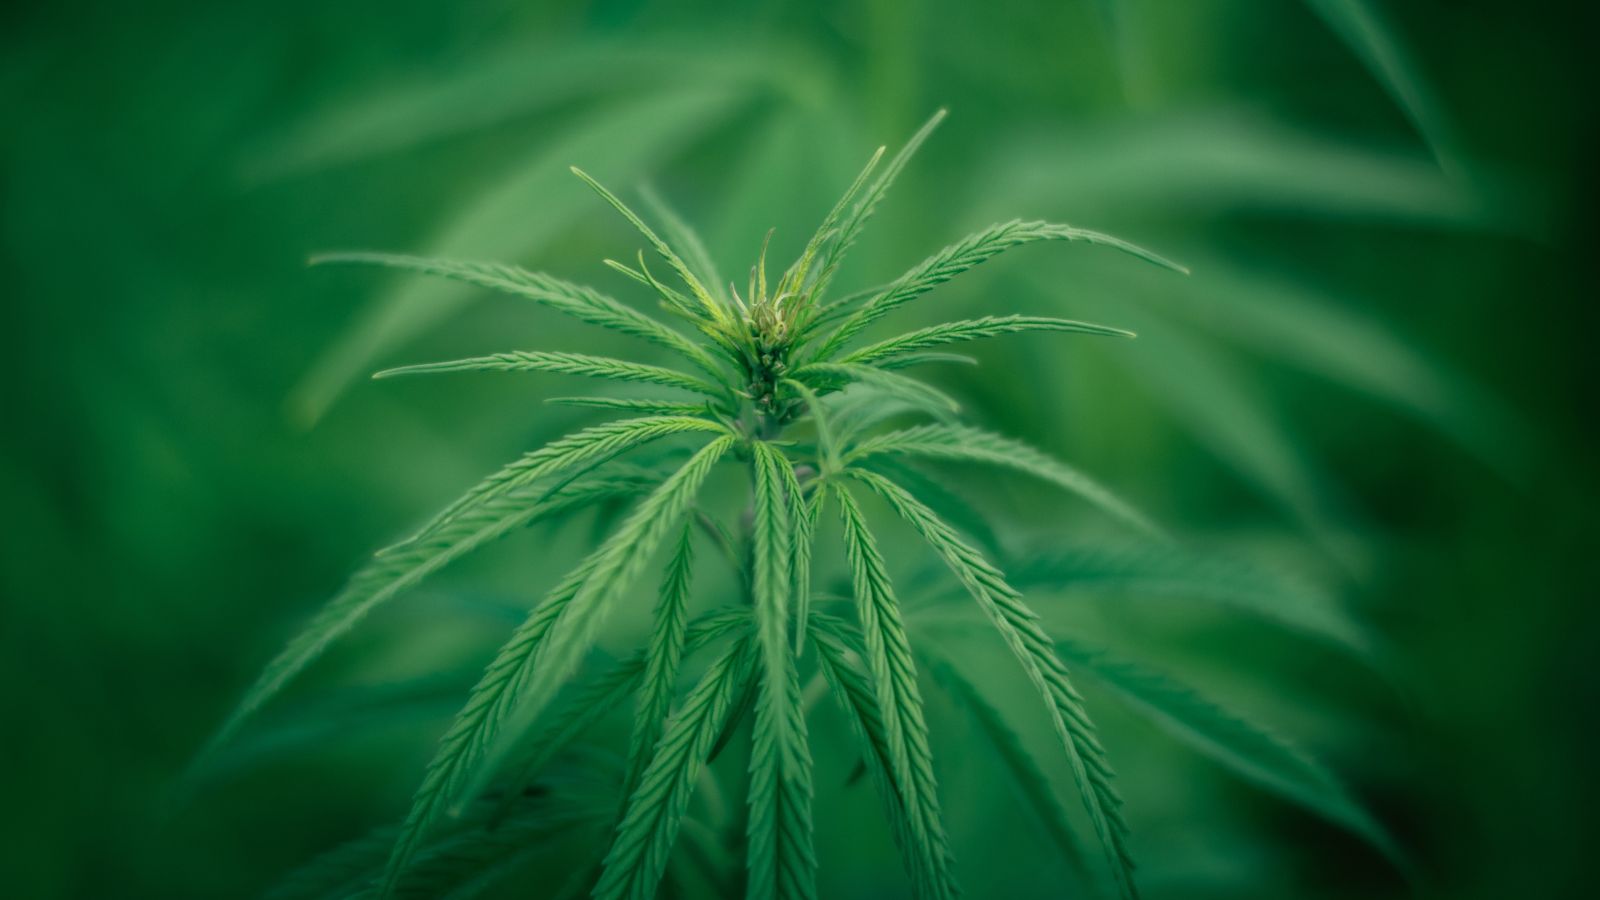 Wisconsin legislature to consider legalizing medicinal marijuana